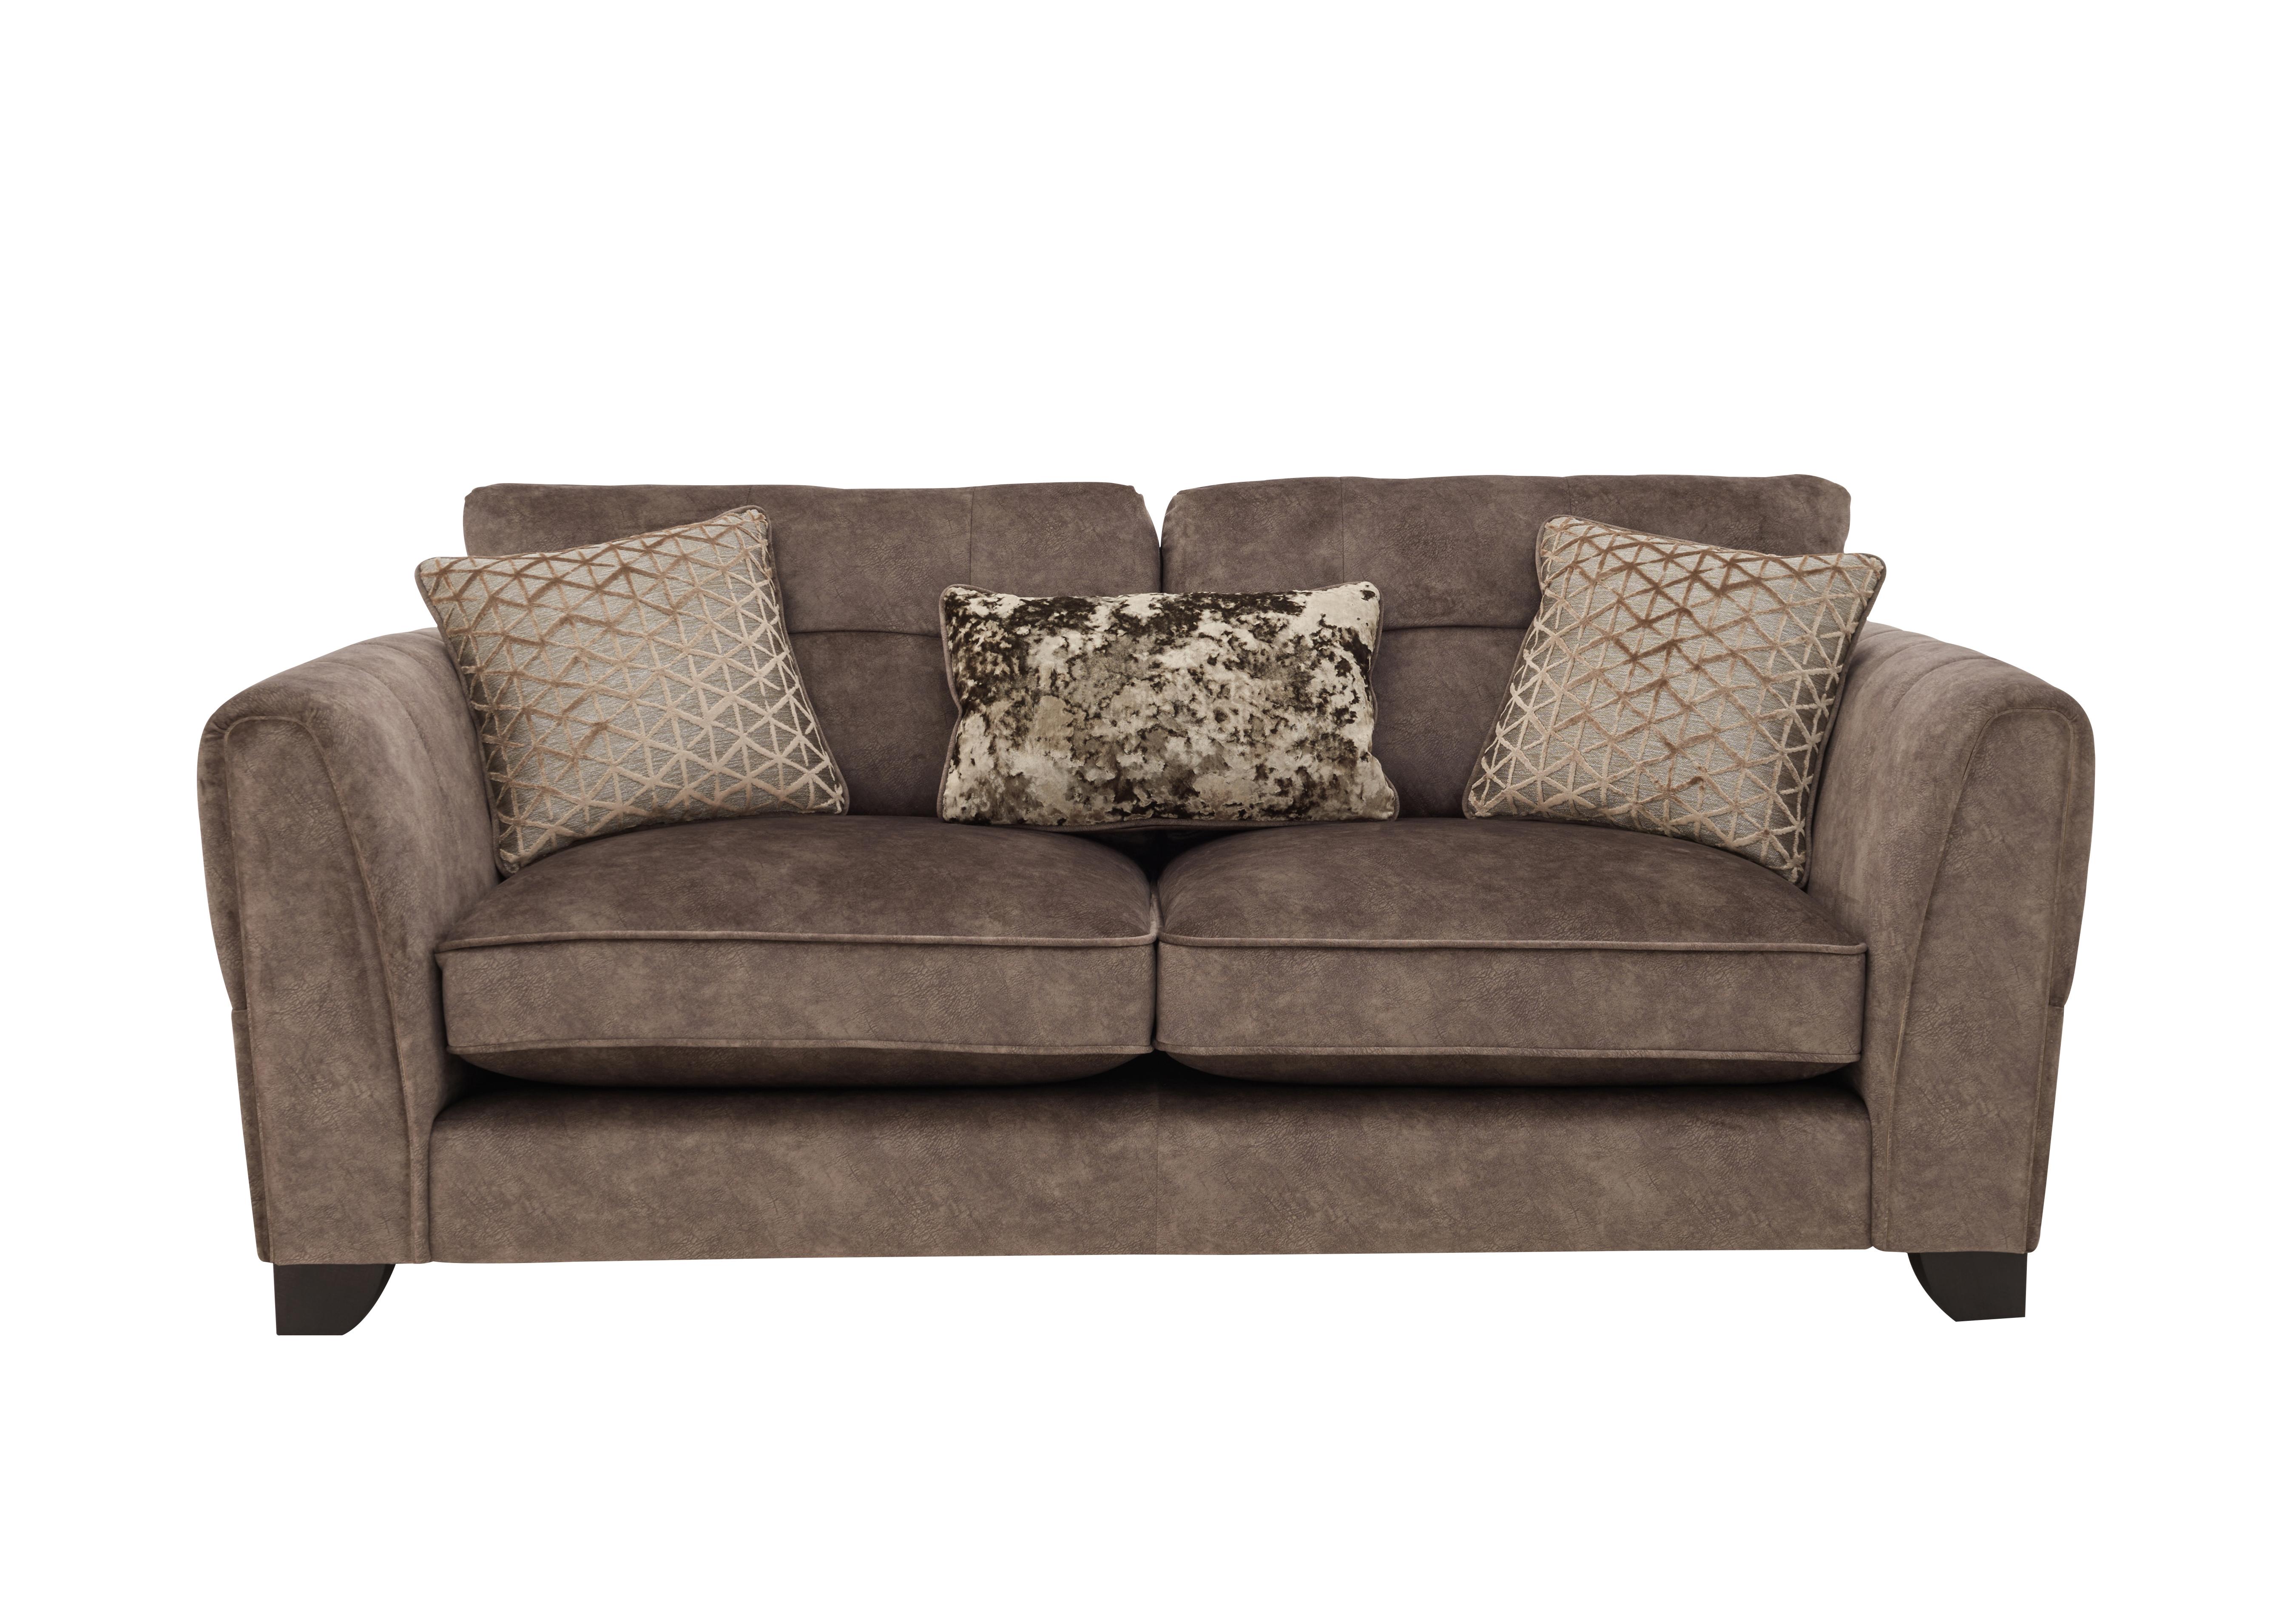 Ariana 3 Seater Fabric Classic Back Sofa in Dapple Chocolate No Insert on Furniture Village